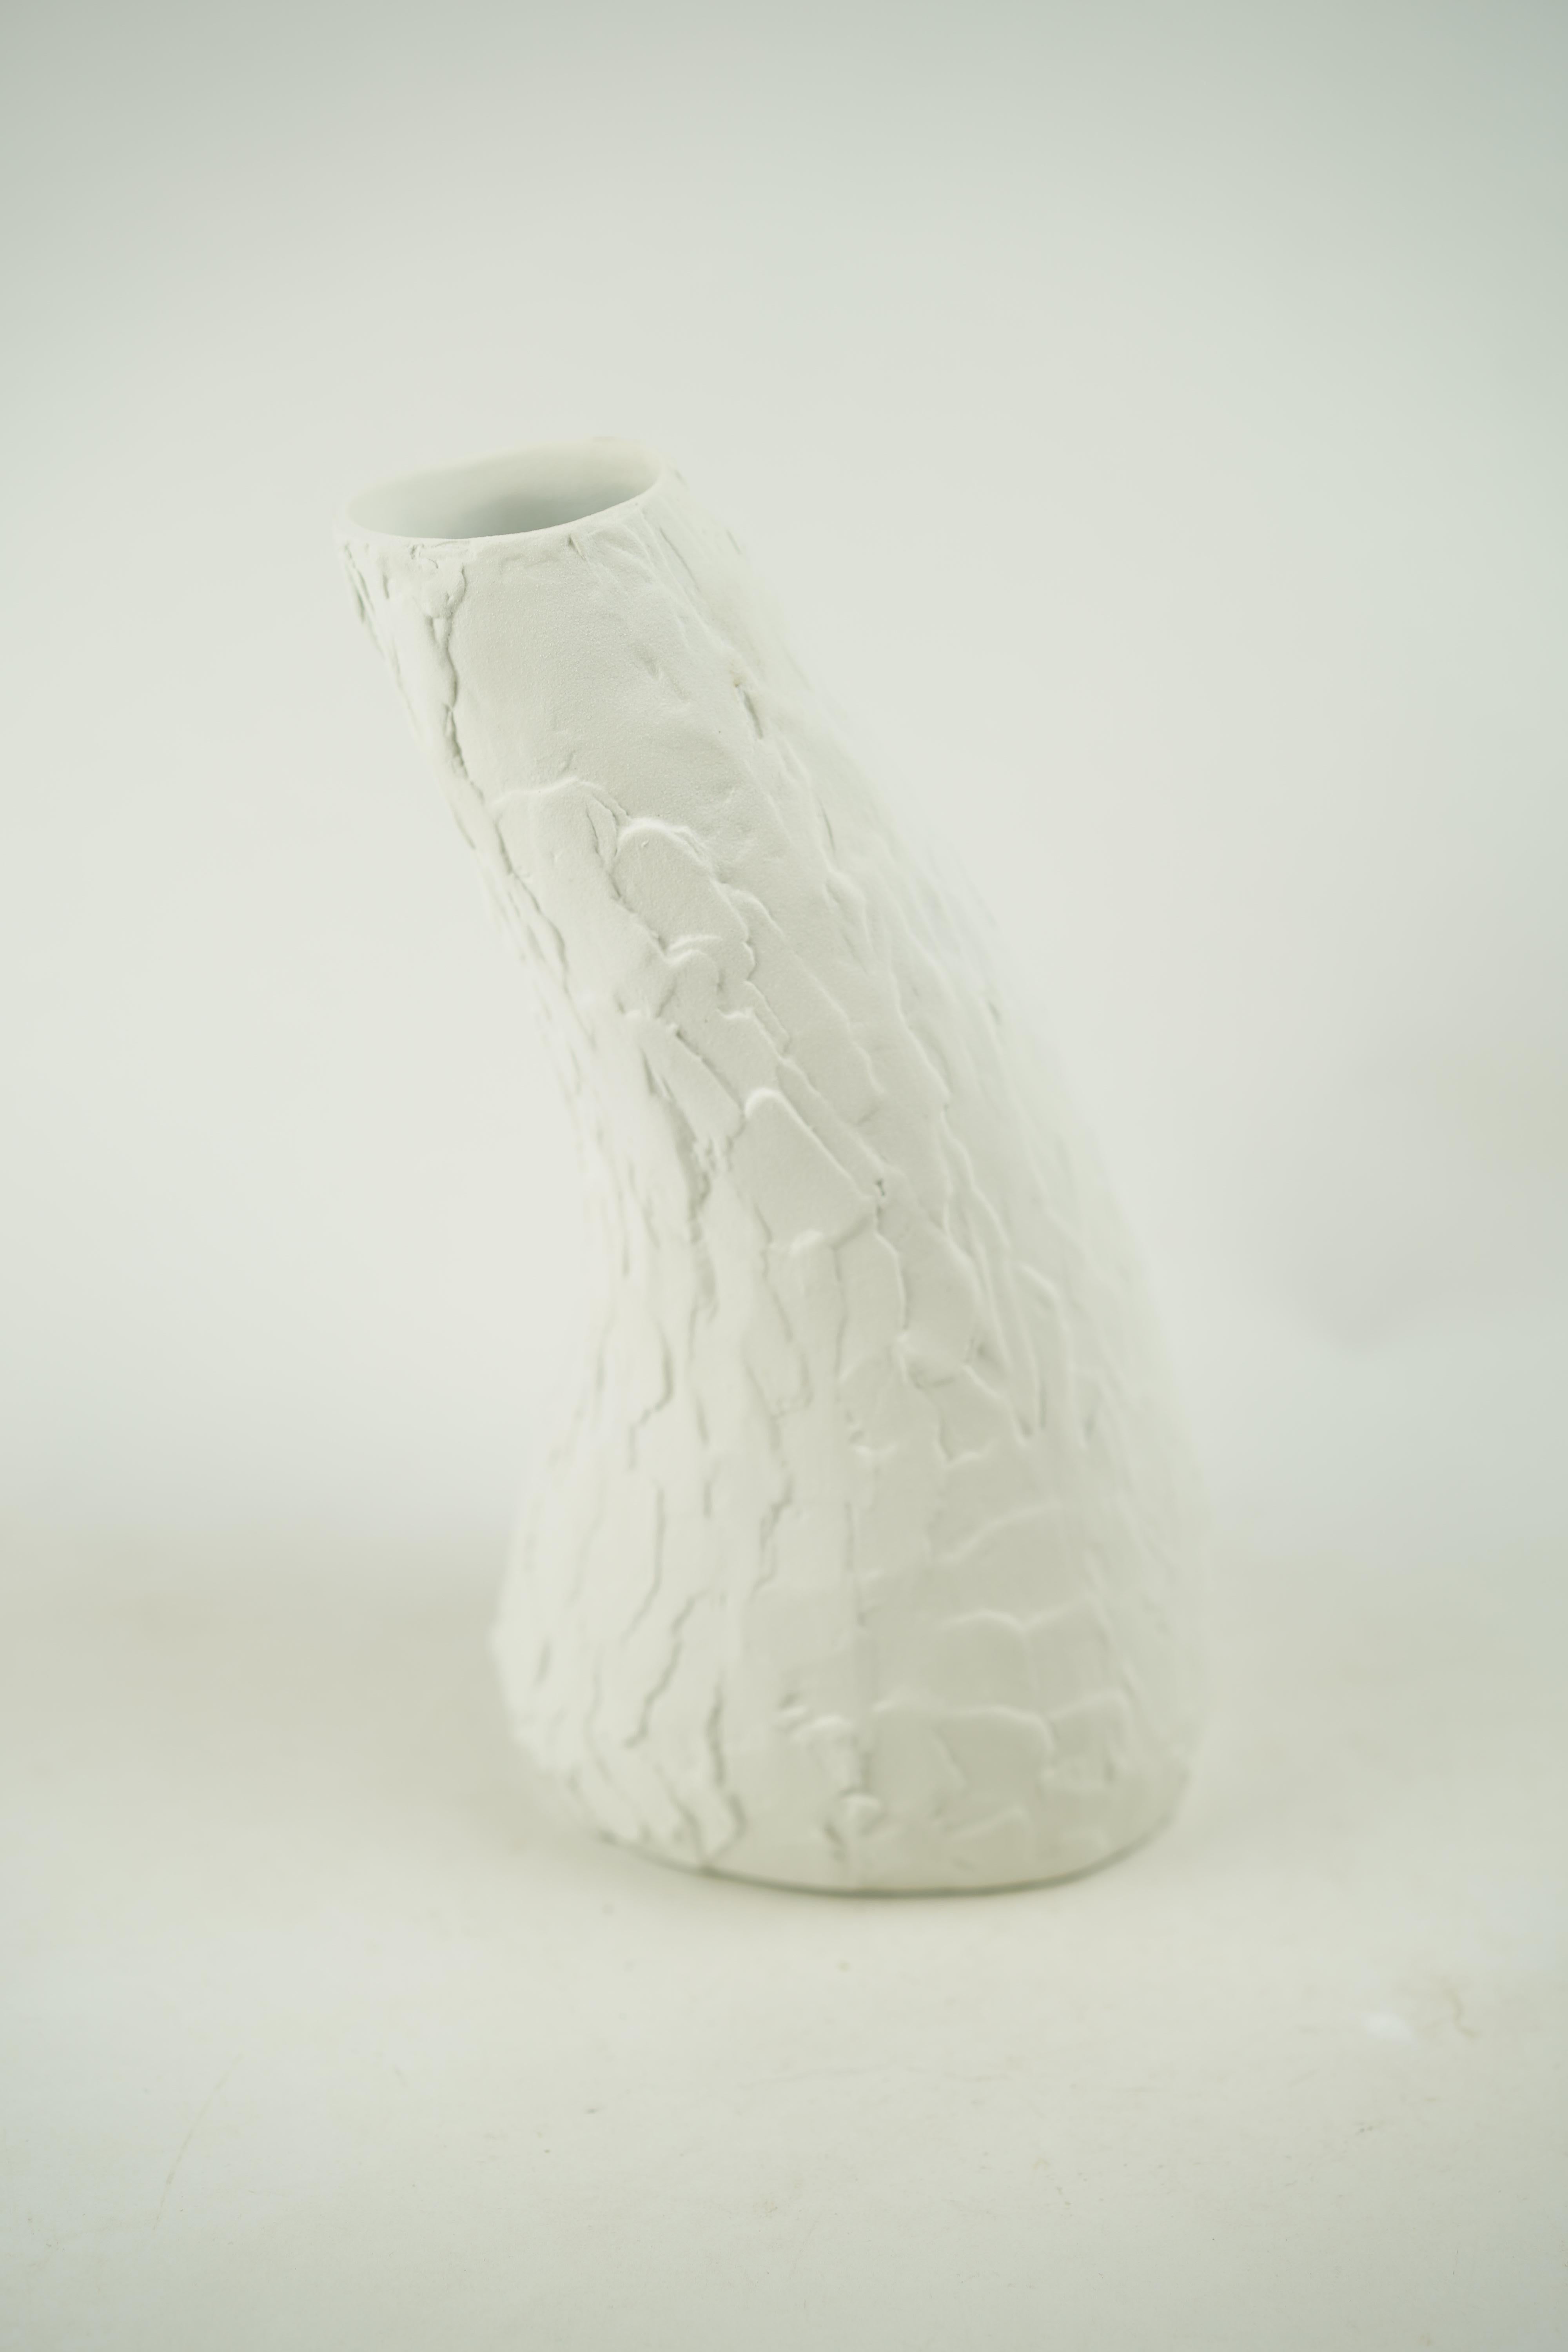 Wabi Sabi Bow Ceramic Vase In New Condition For Sale In London, GB